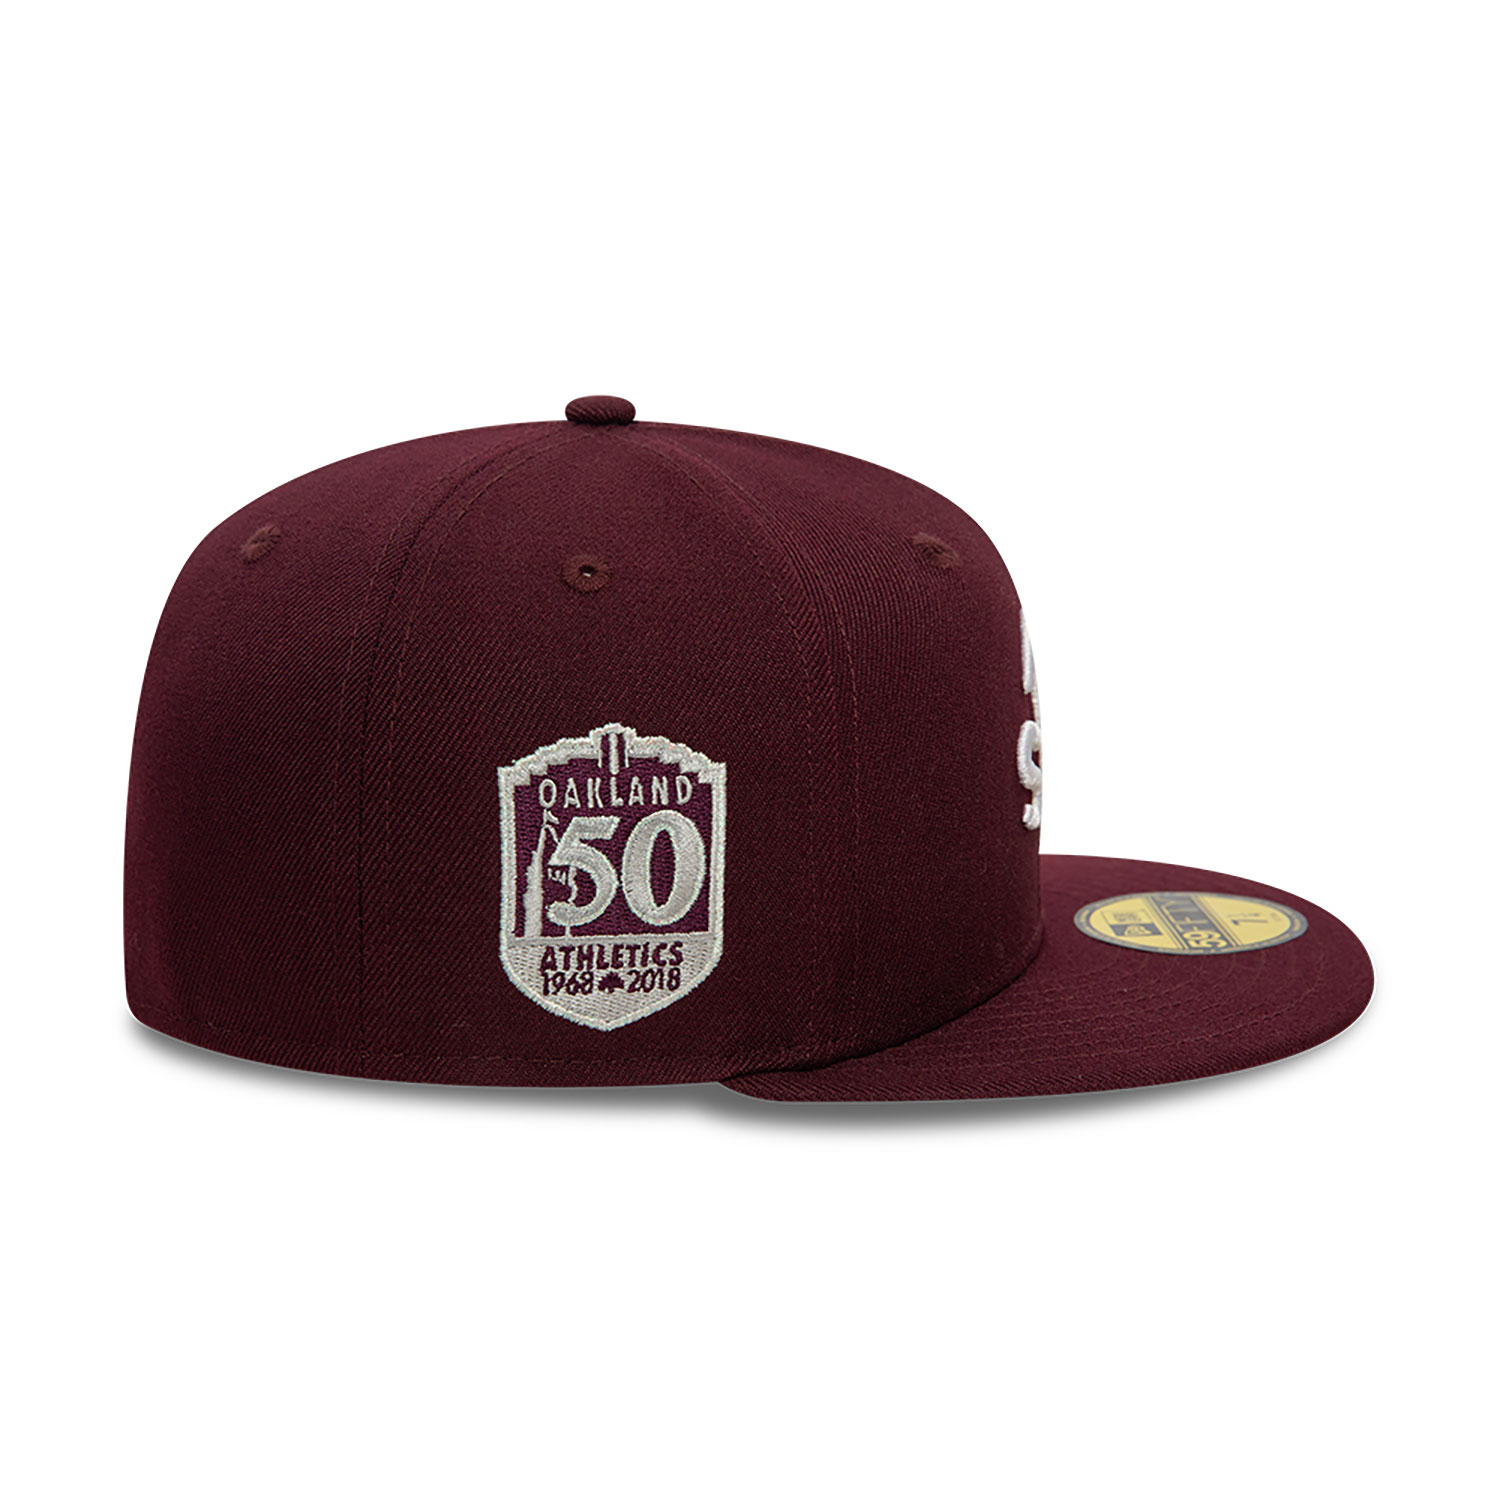 THE CAP 5950 WASNAT MLB Upside Down 特別セール品 - 帽子